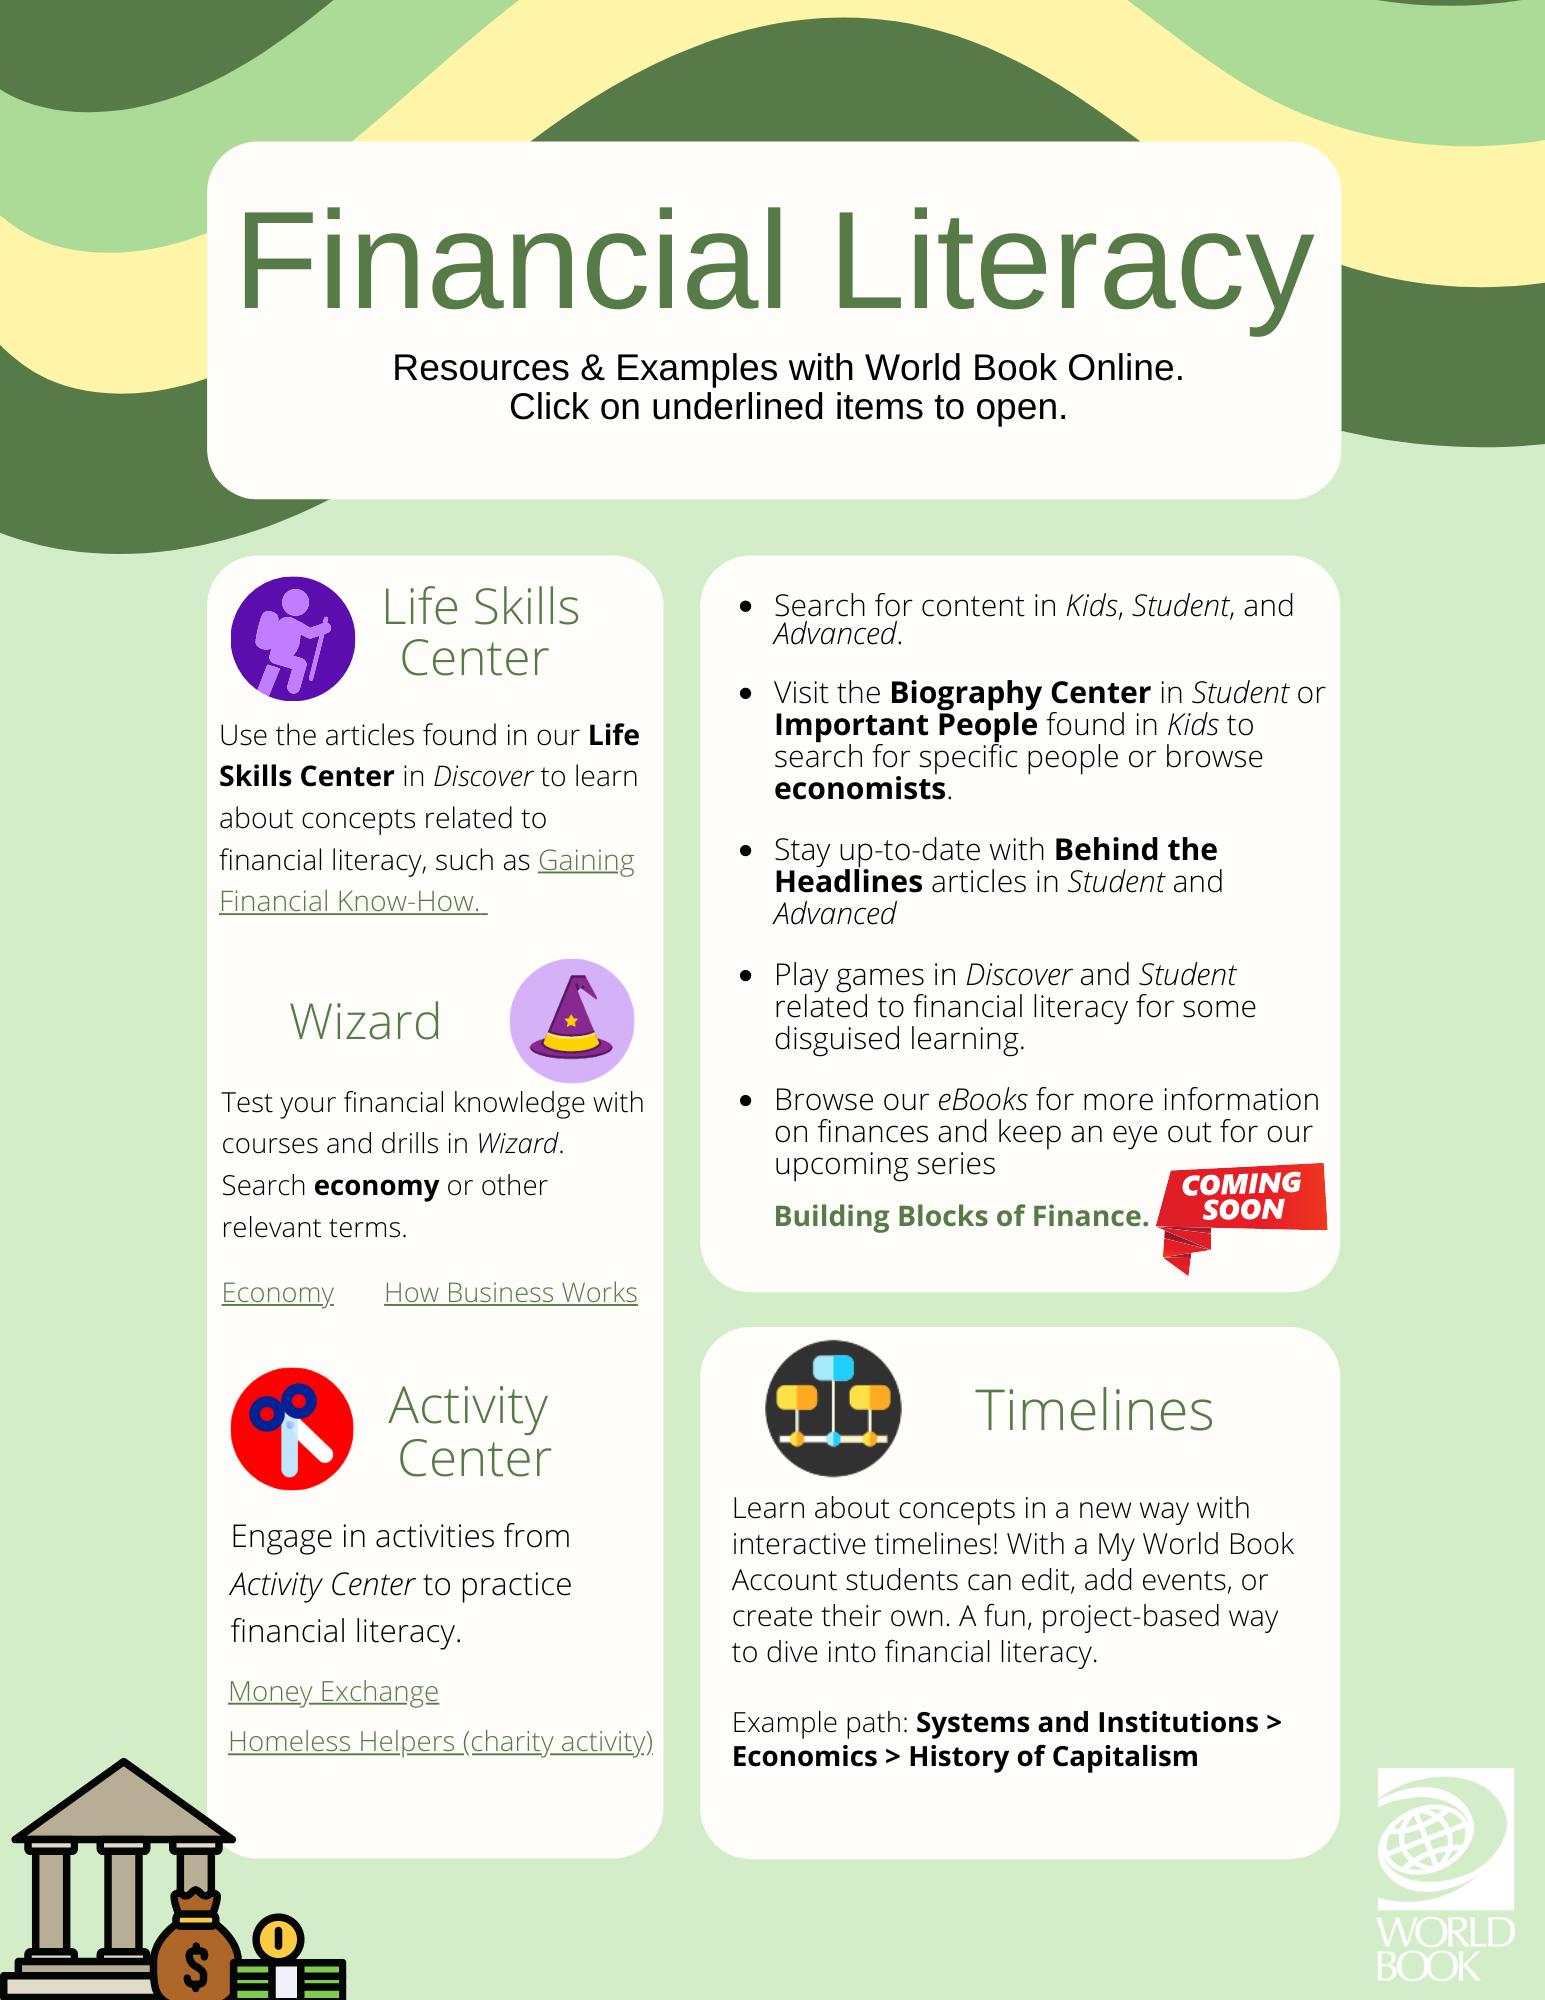 Financial Literacy month